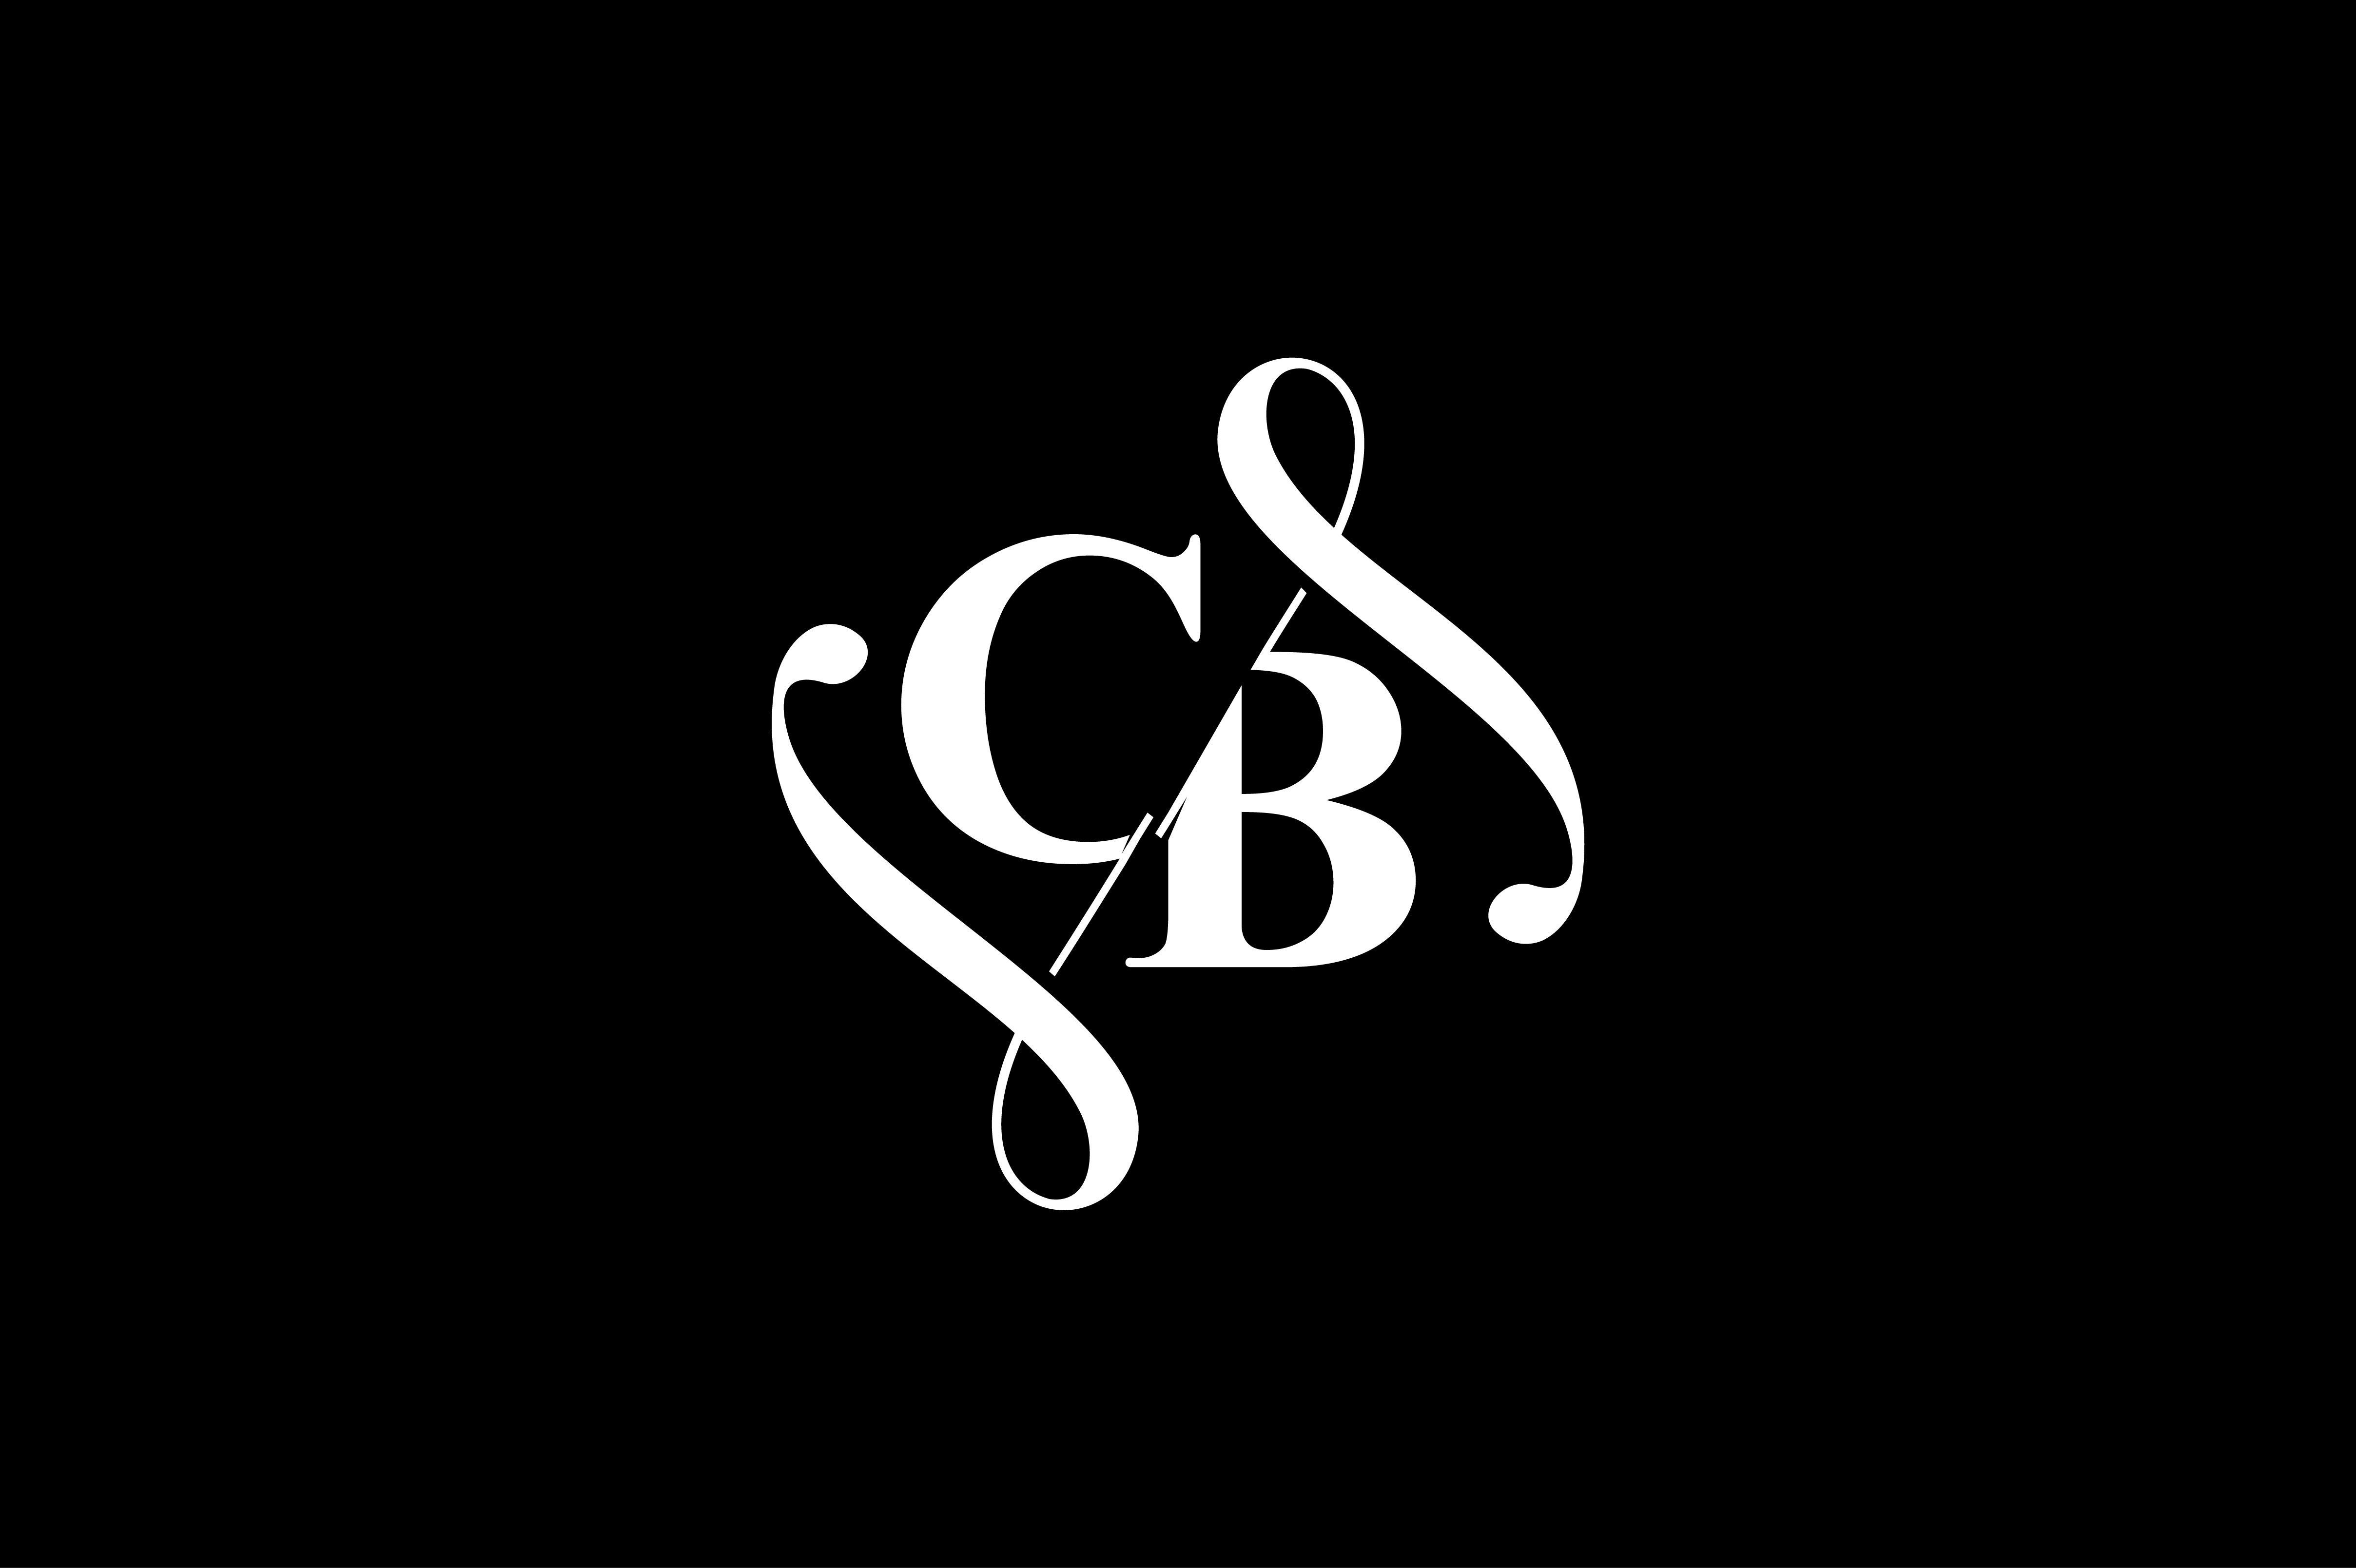 CB Monogram logo Design V6 By Vectorseller | TheHungryJPEG.com